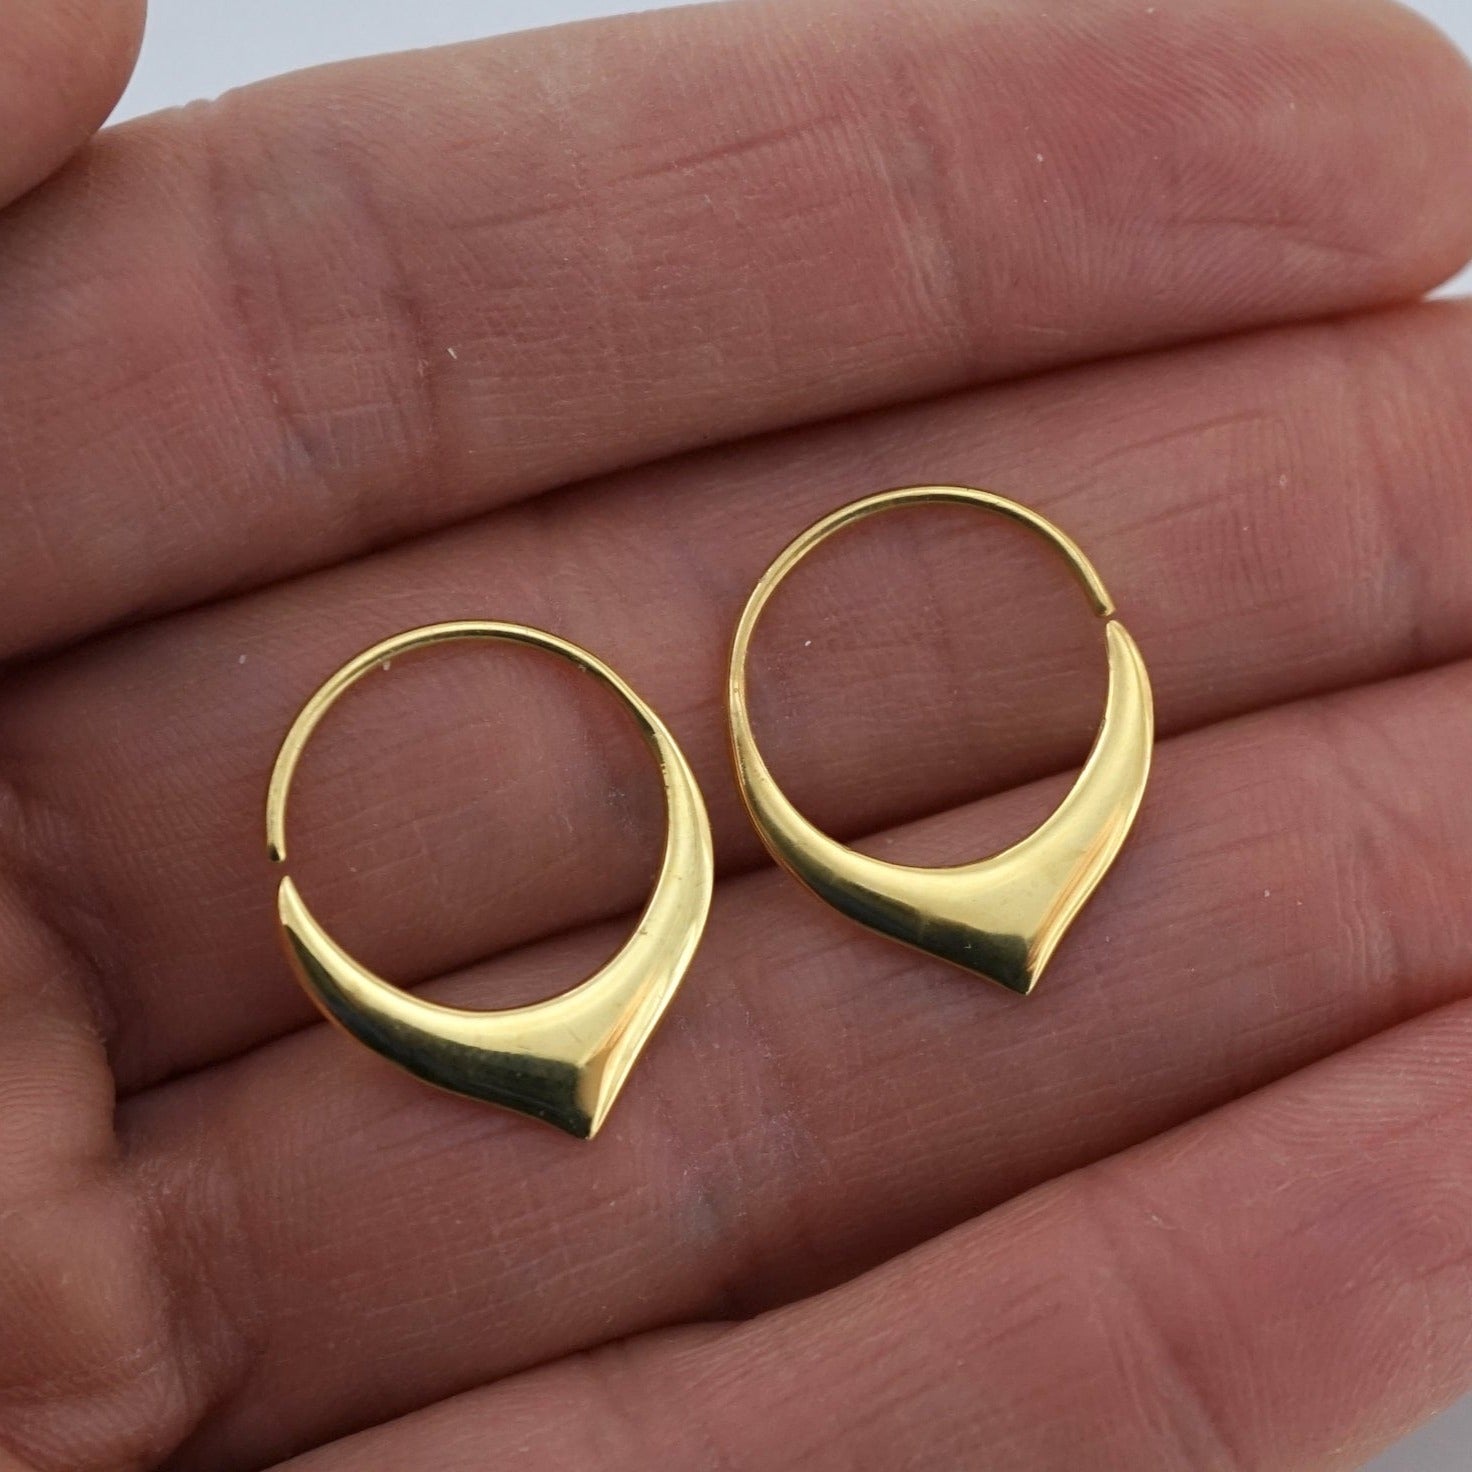 Gold Flower Hoop Earrings, 14K Yellow Gold Small Hoops Petal Design